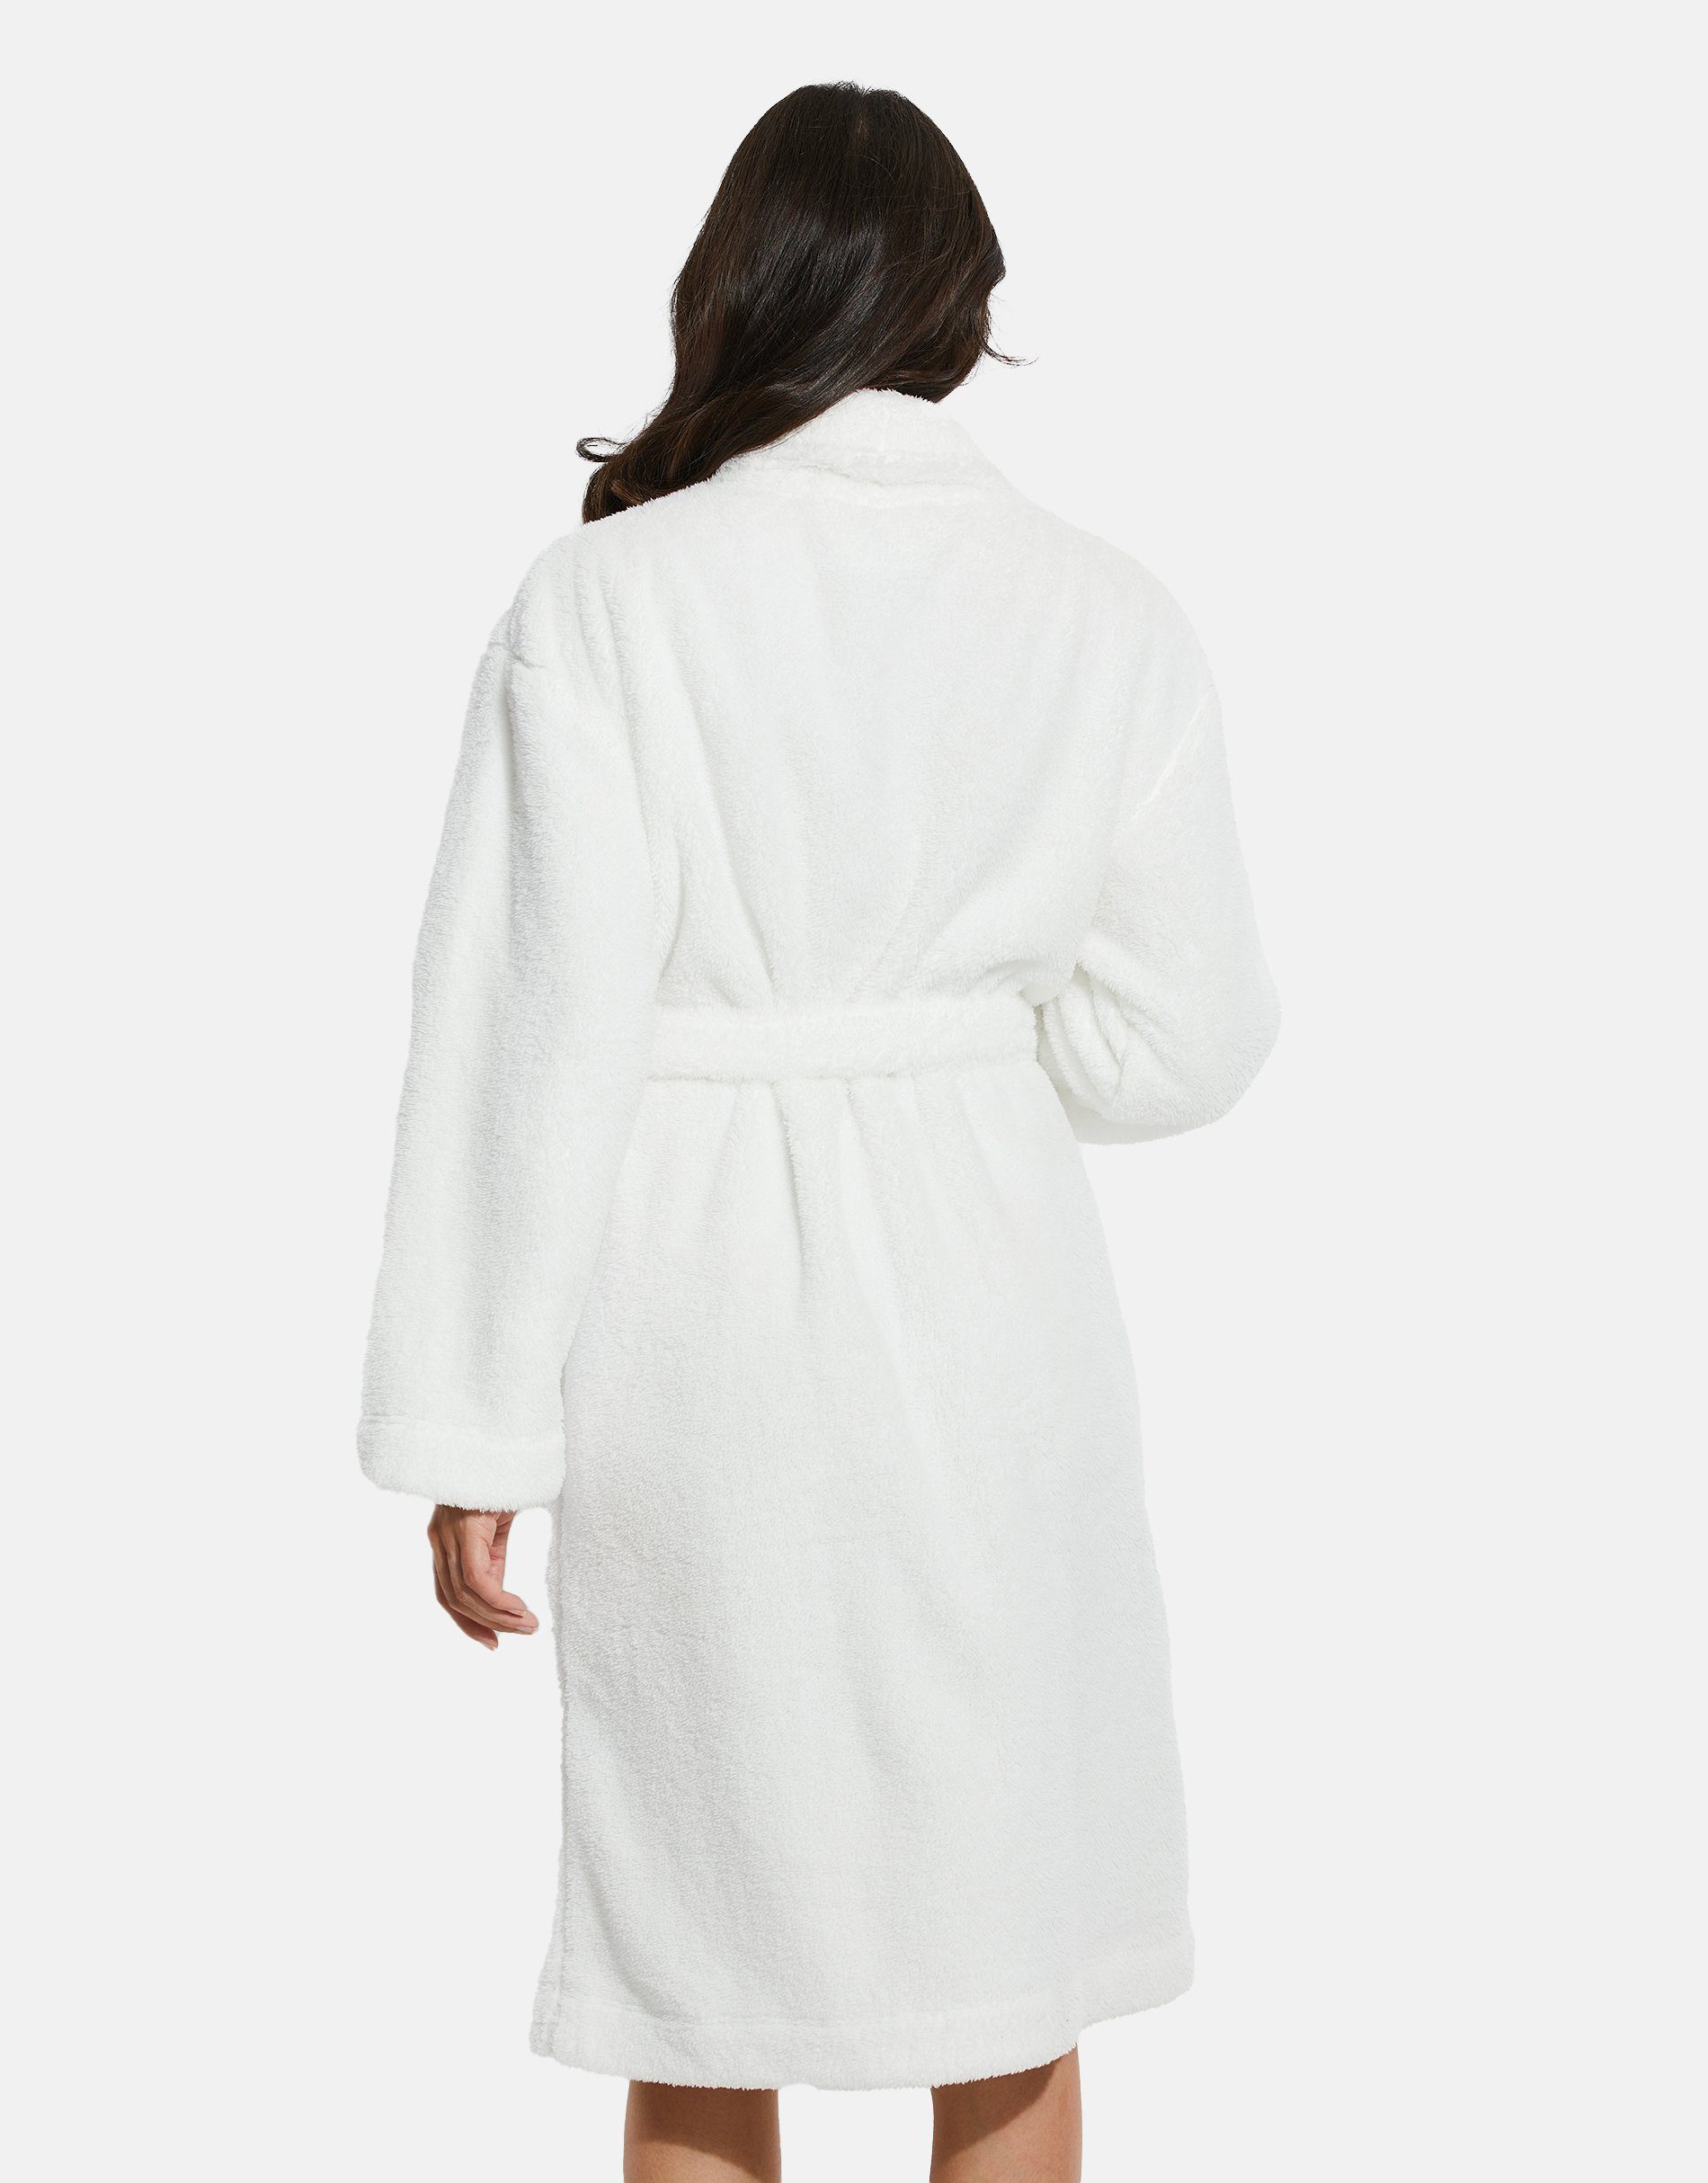 Polyester, Damenbademantel Weiß Robe, Midilänge, Threadbare Schnürverschluss Robert THB